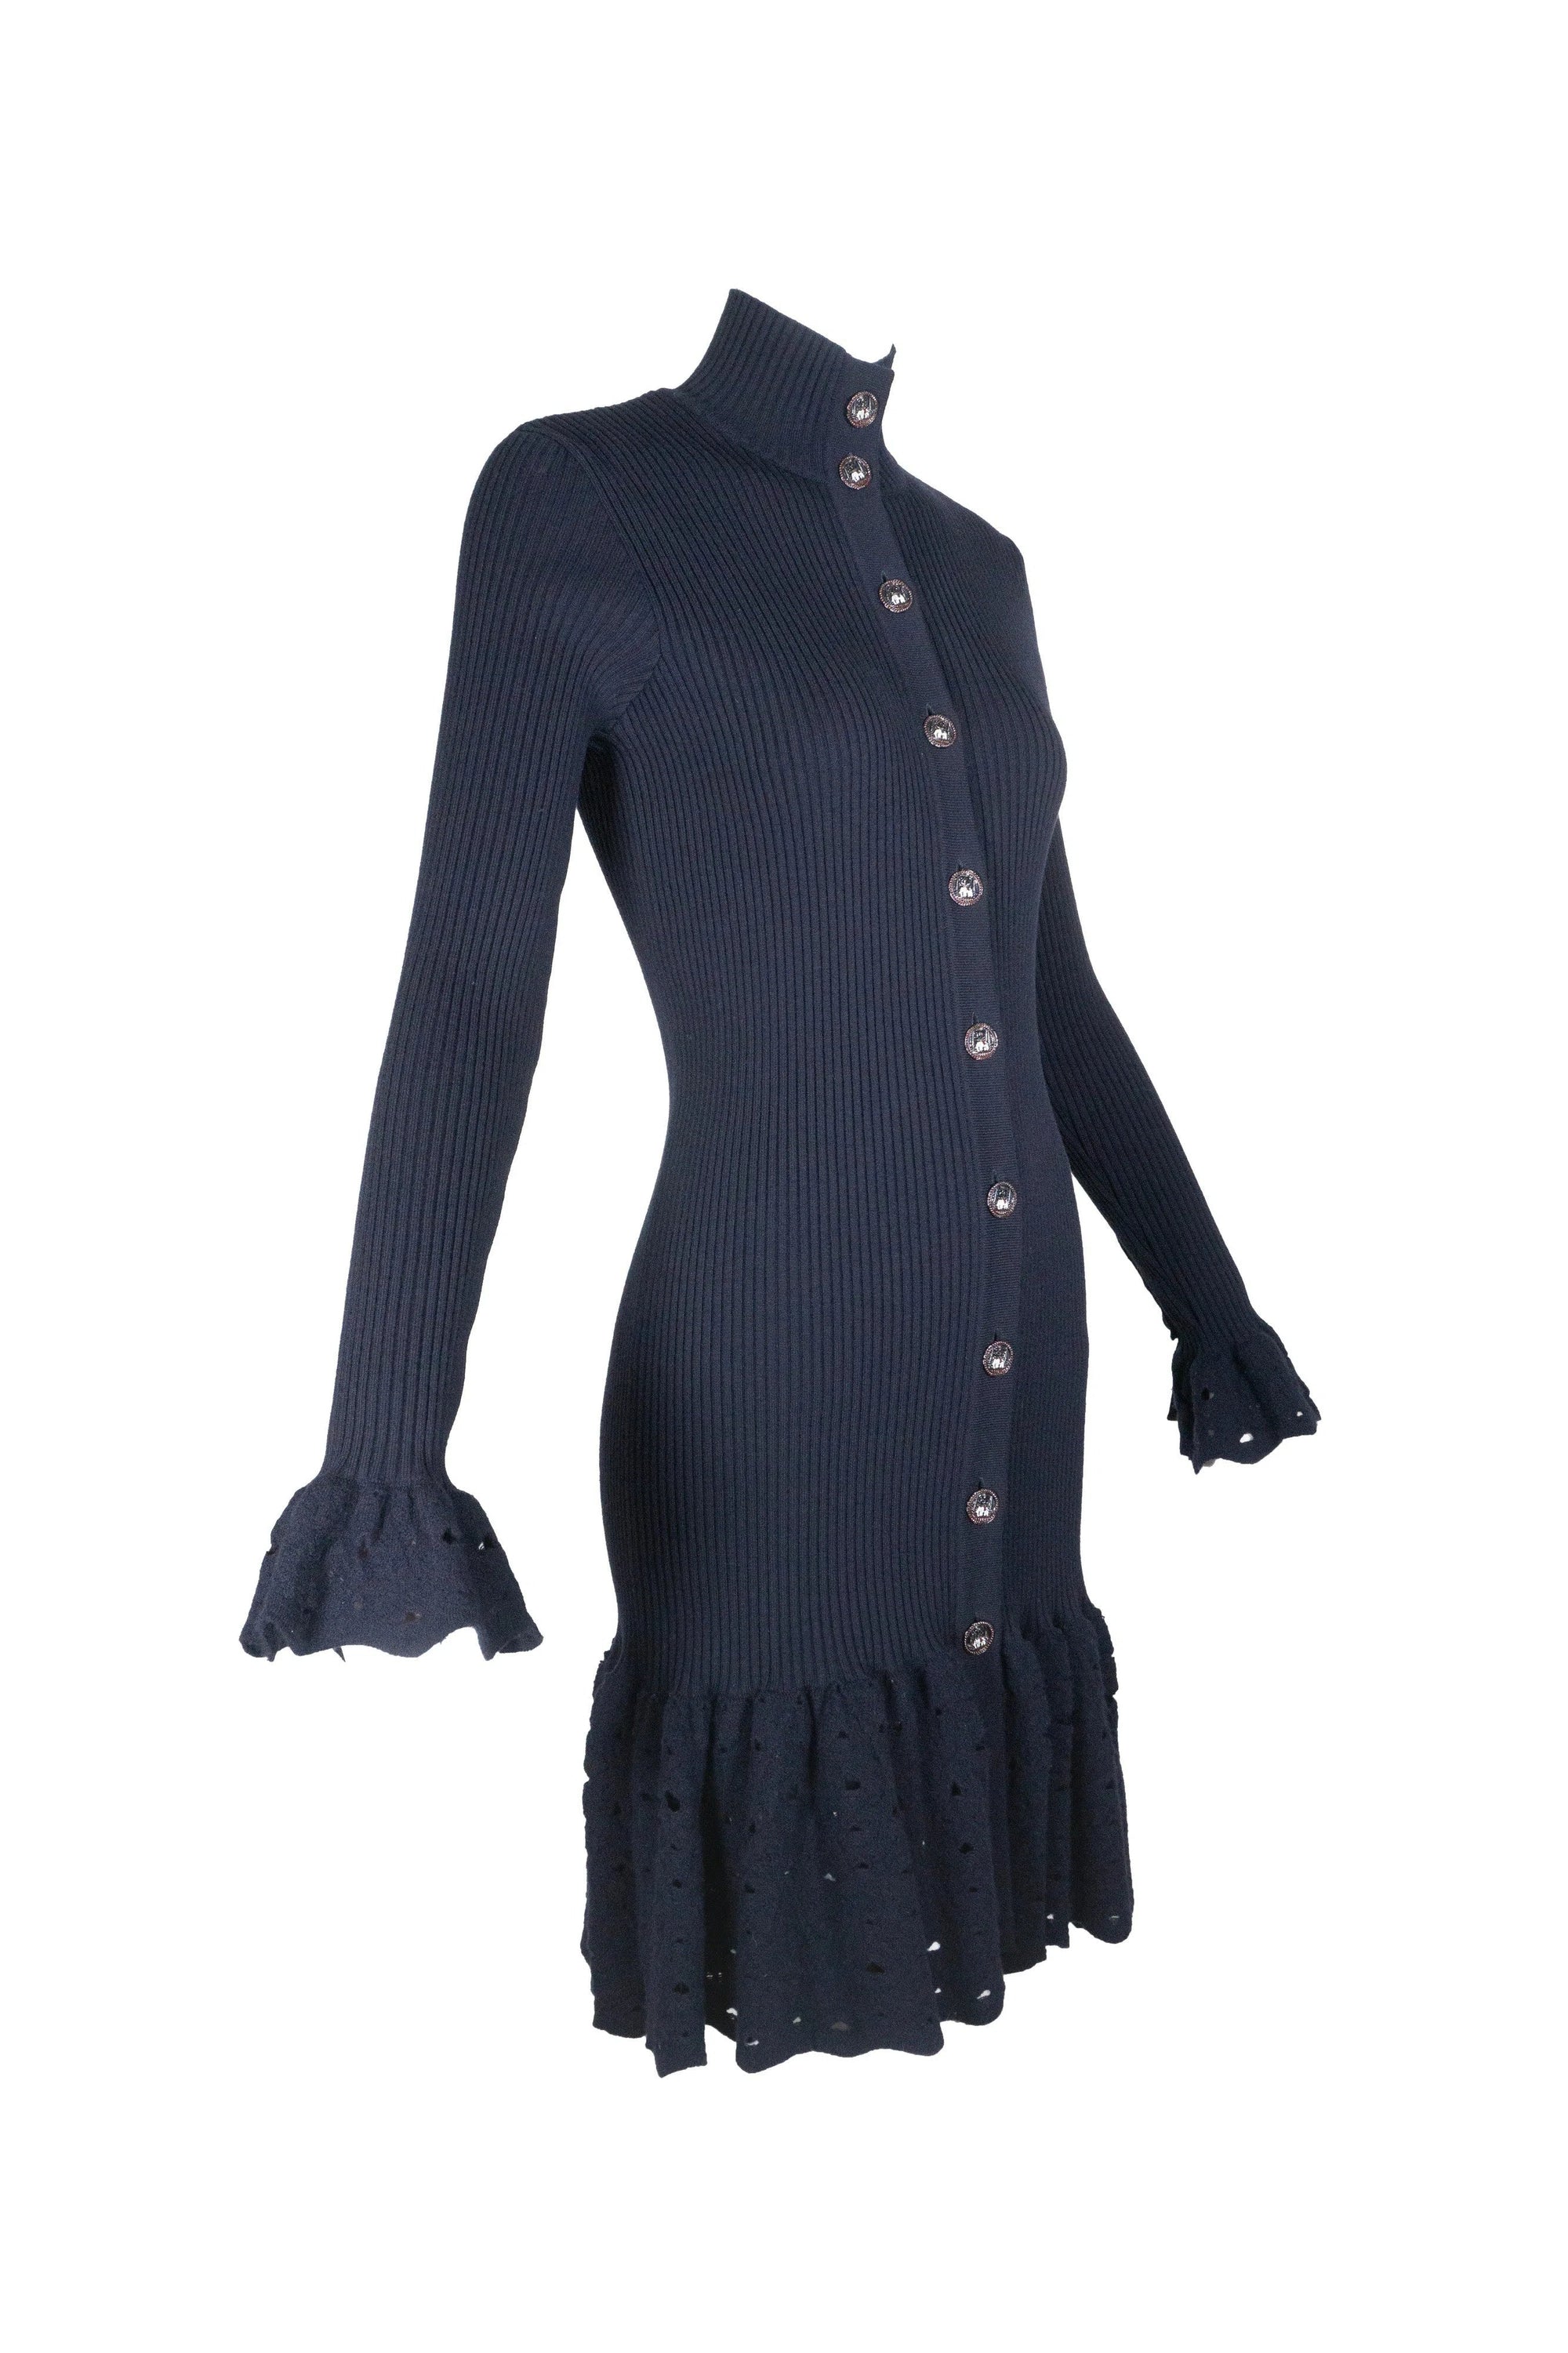 Chanel Paris Bombay Knit Dress